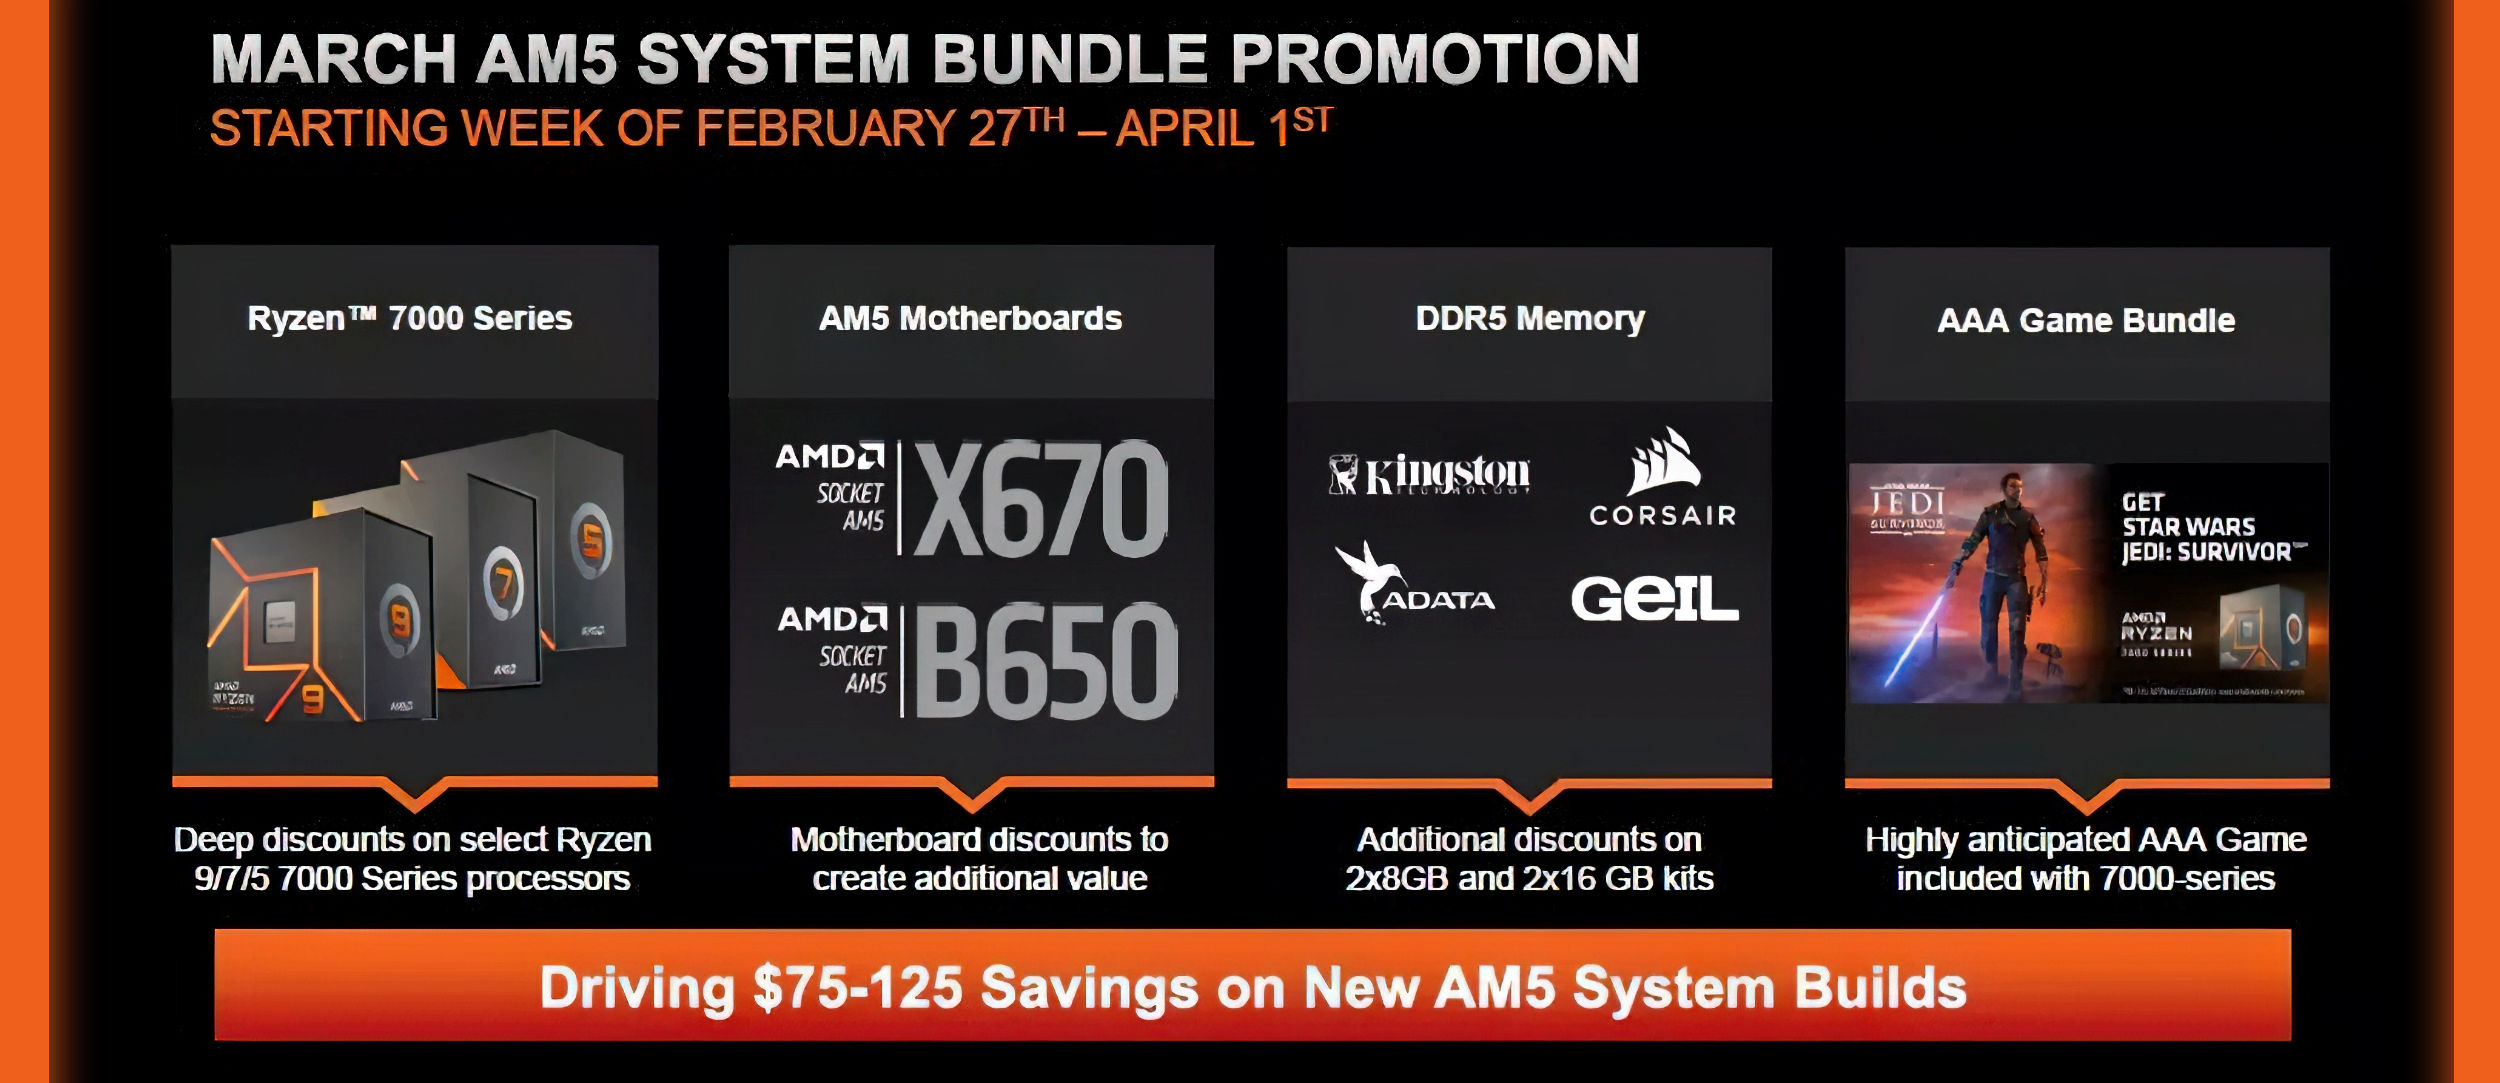 AMD announces Ryzen 7000 system bundle up to $125 savings on AM5 builds - VideoCardz.com